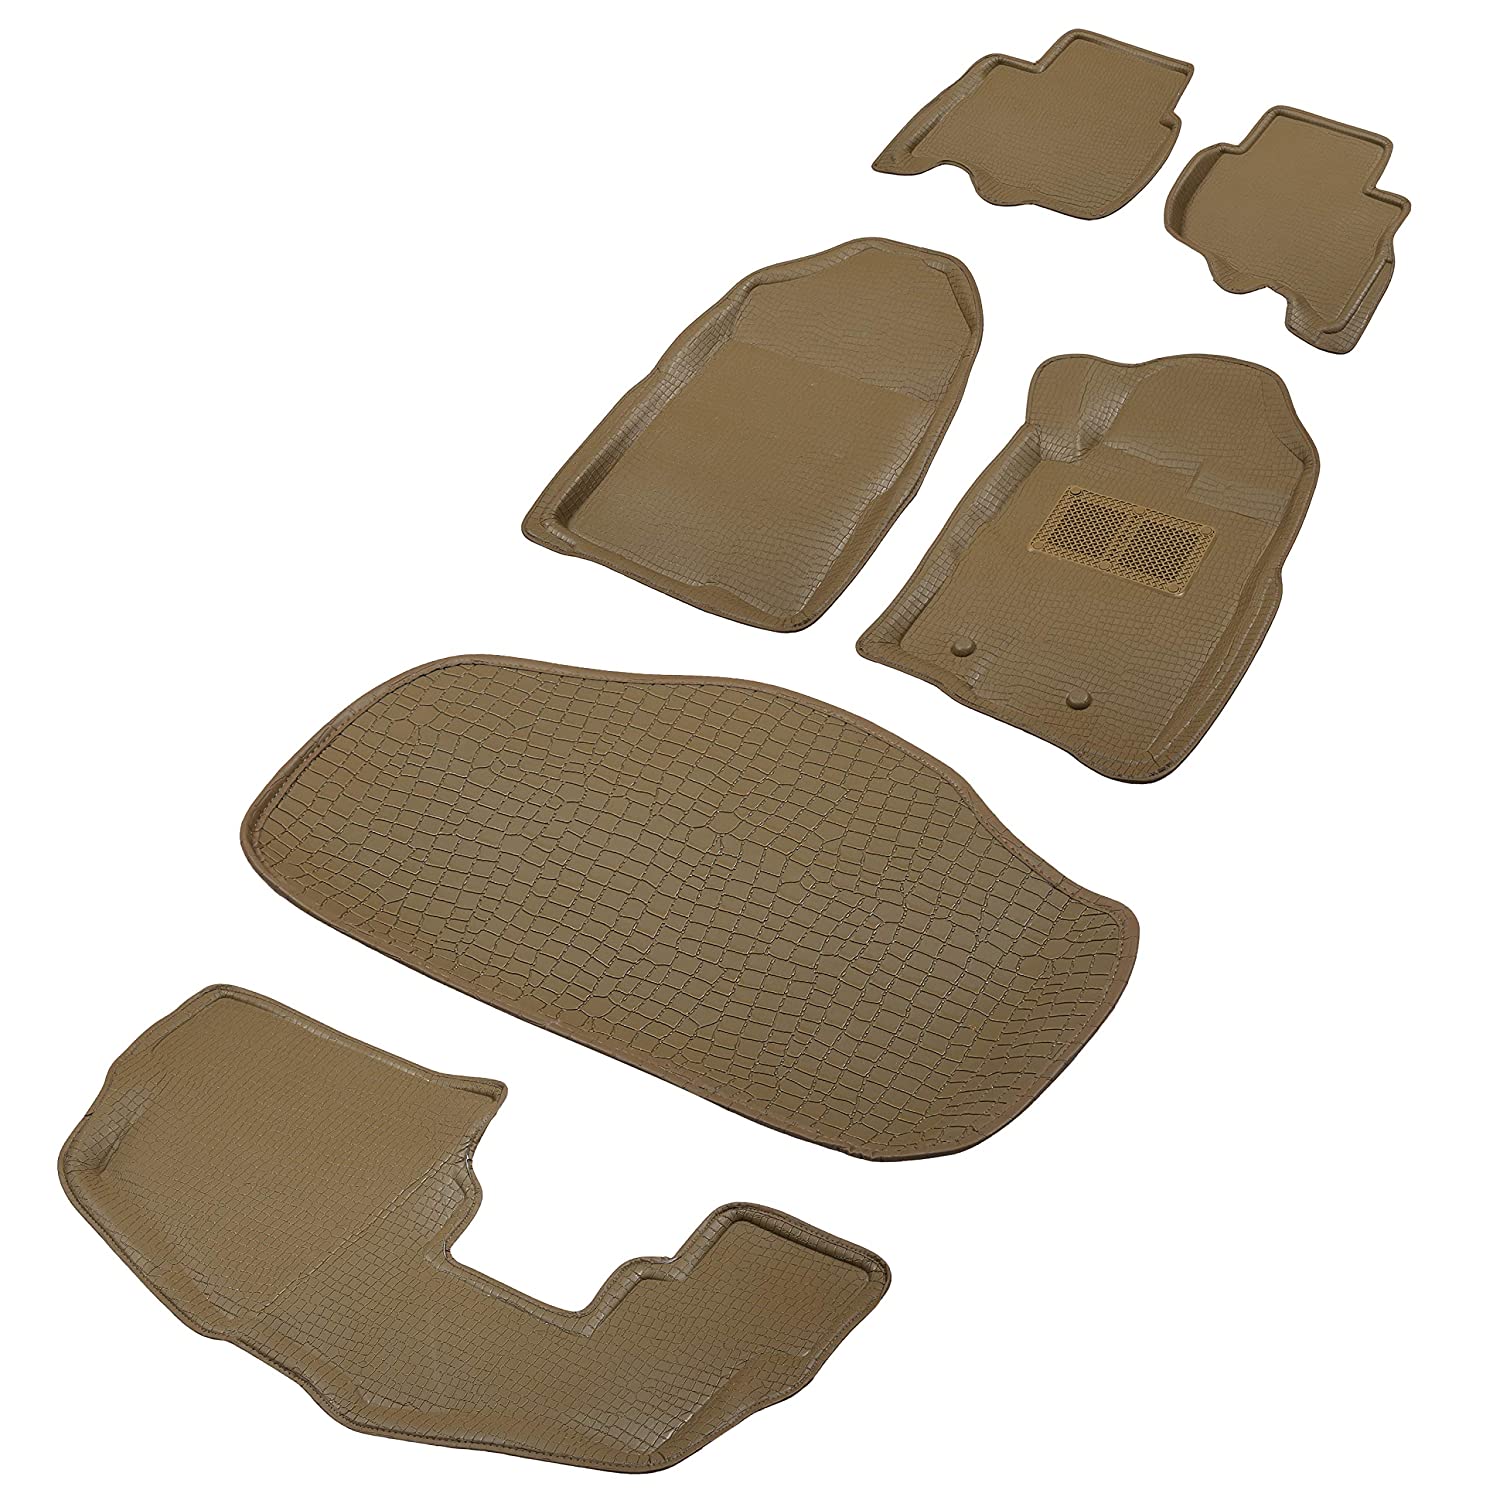 Drivn 3D Customised Car Floor Mat for Ford Endeavour - Beige (Set of 5)